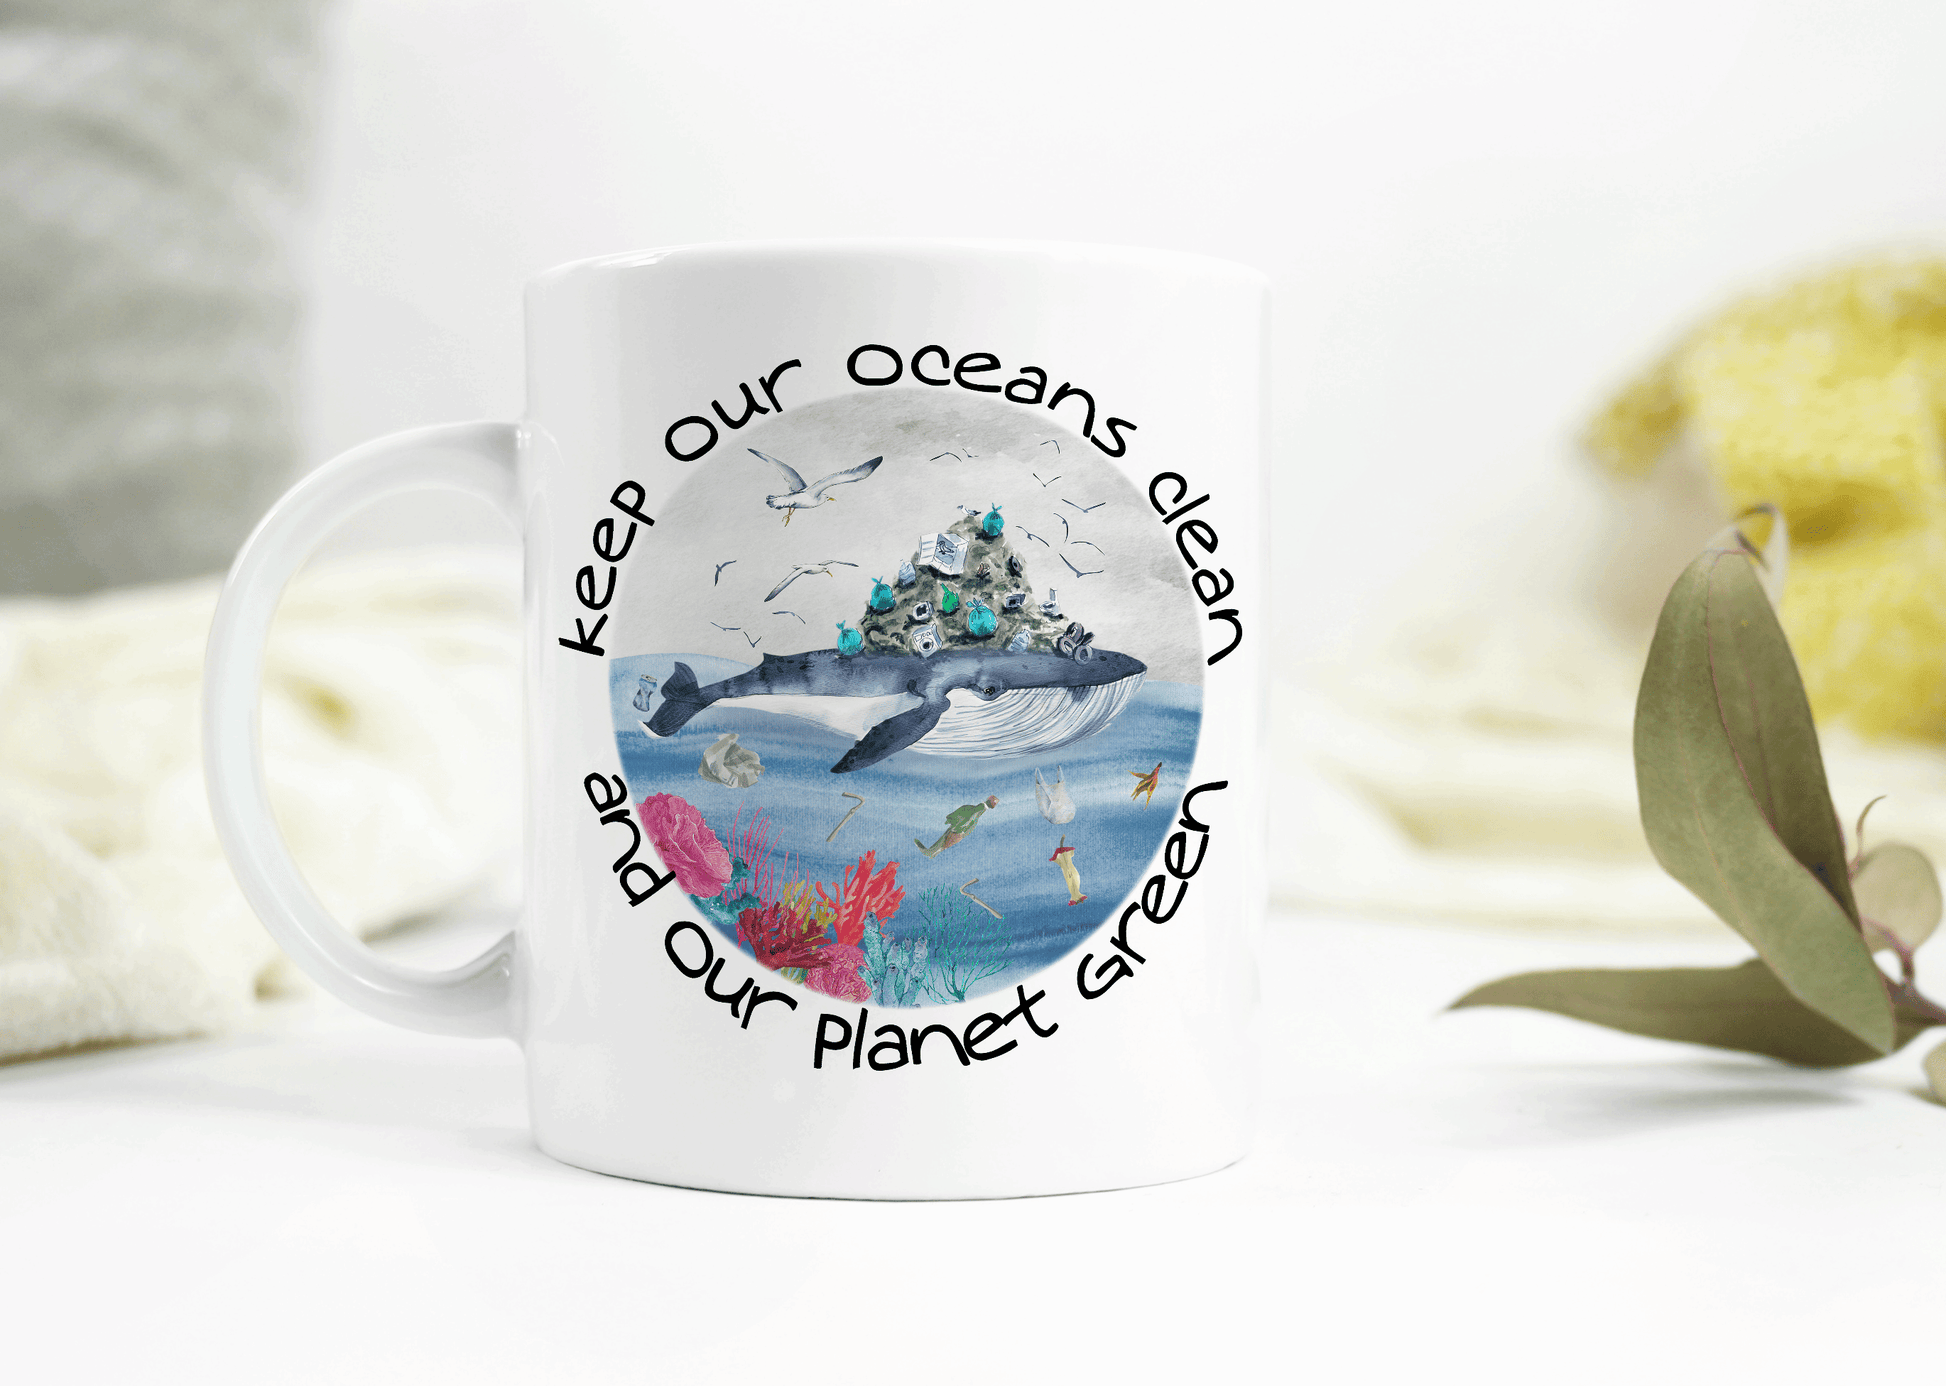  Keep Our Oceans Clean Coffee Mug by Free Spirit Accessories sold by Free Spirit Accessories